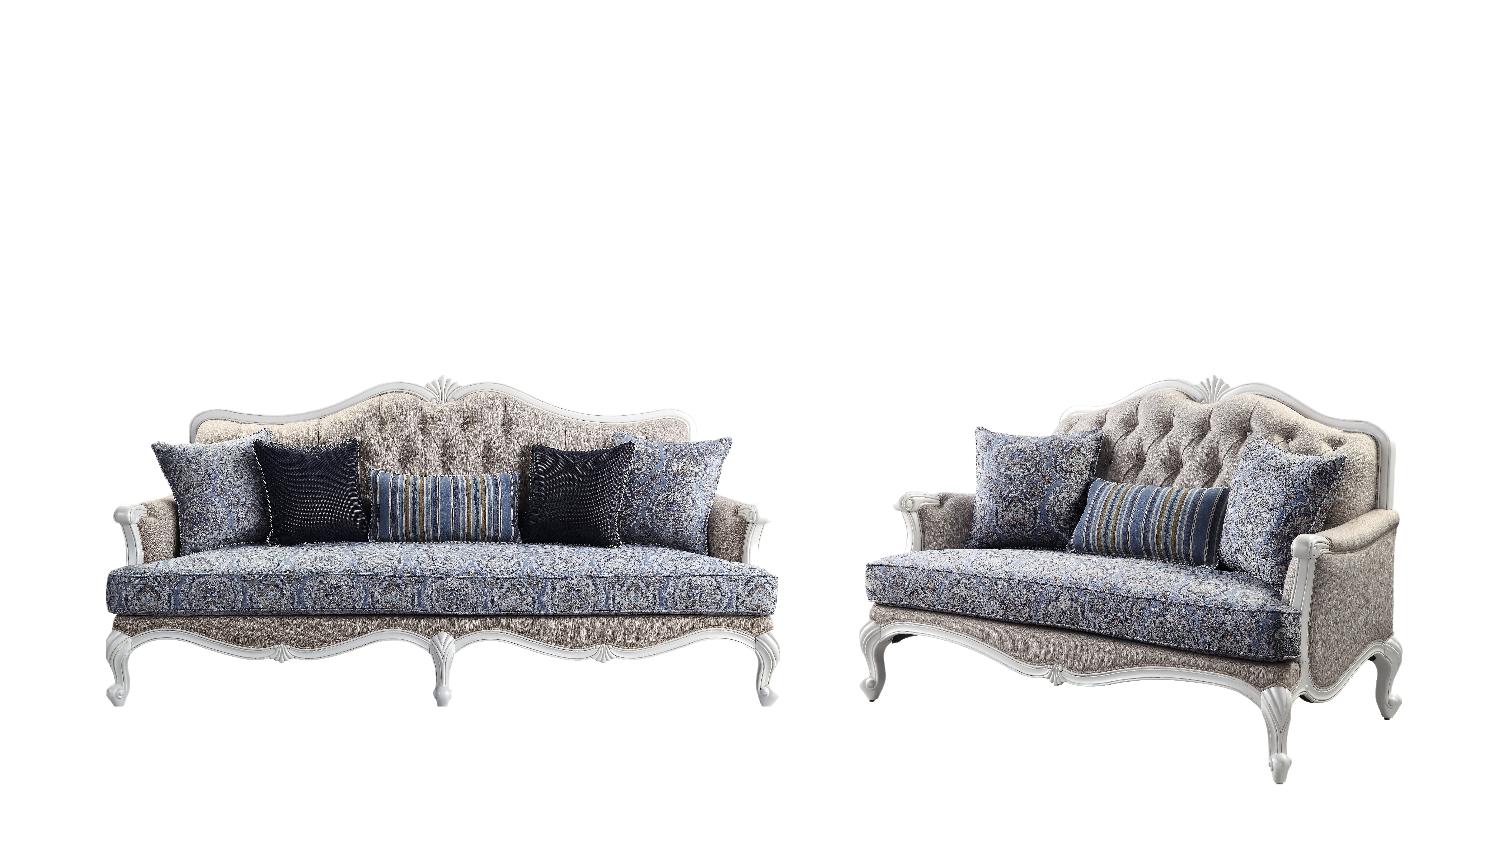 Classic Sofa and Loveseat Set Ciddrenar 54310-2pcs in Beige Fabric